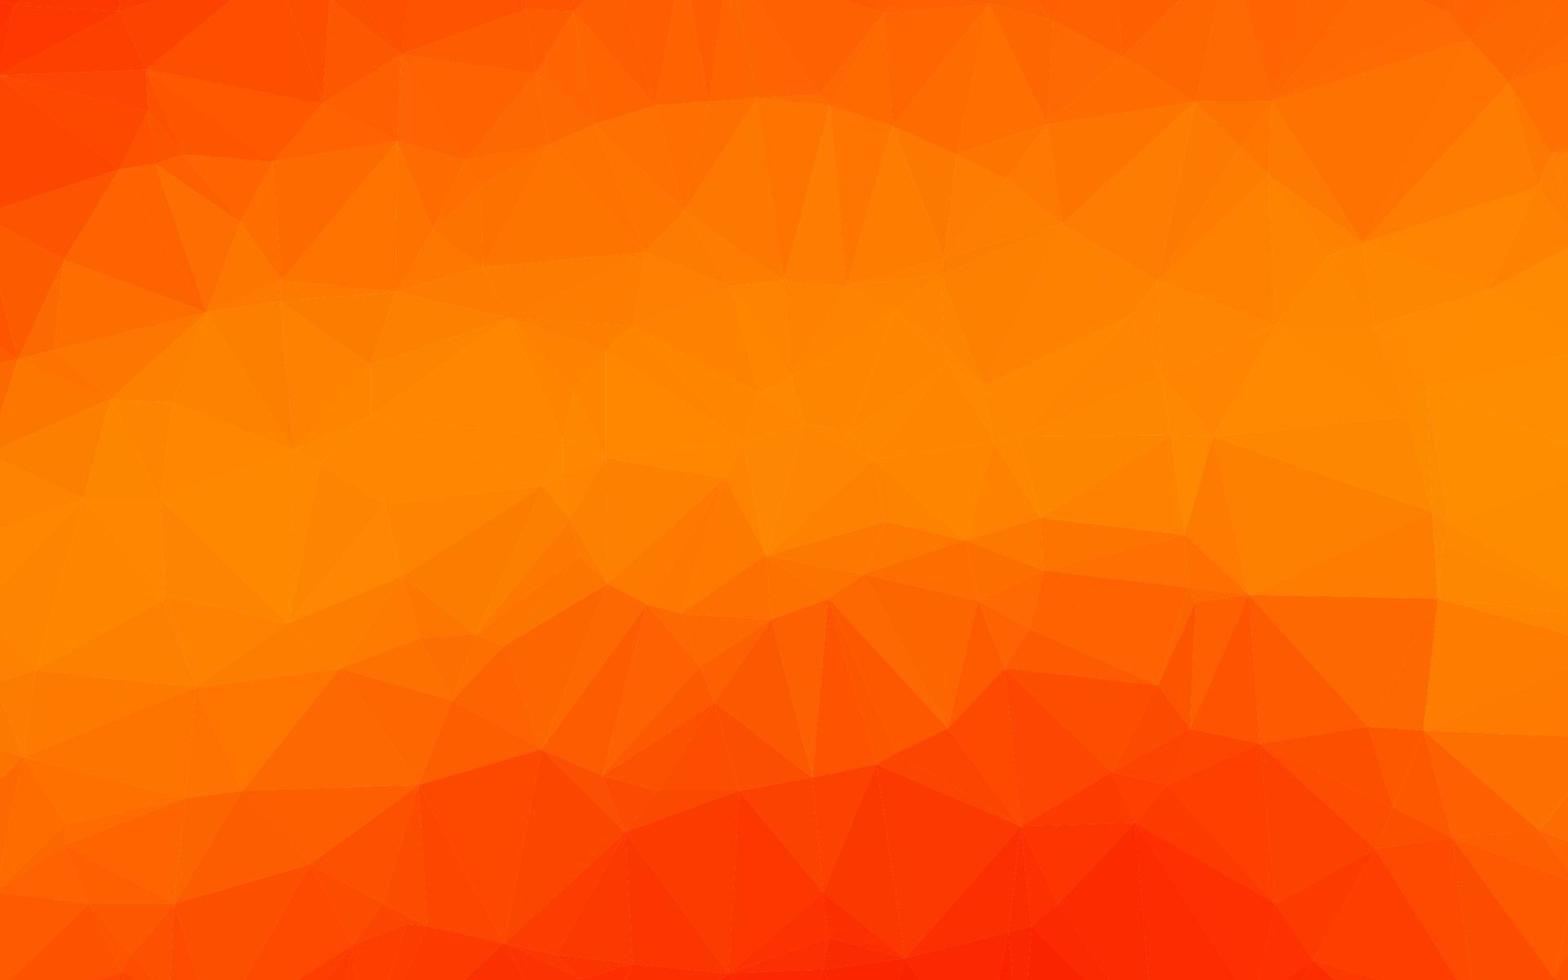 padrão poligonal de vetor laranja claro.